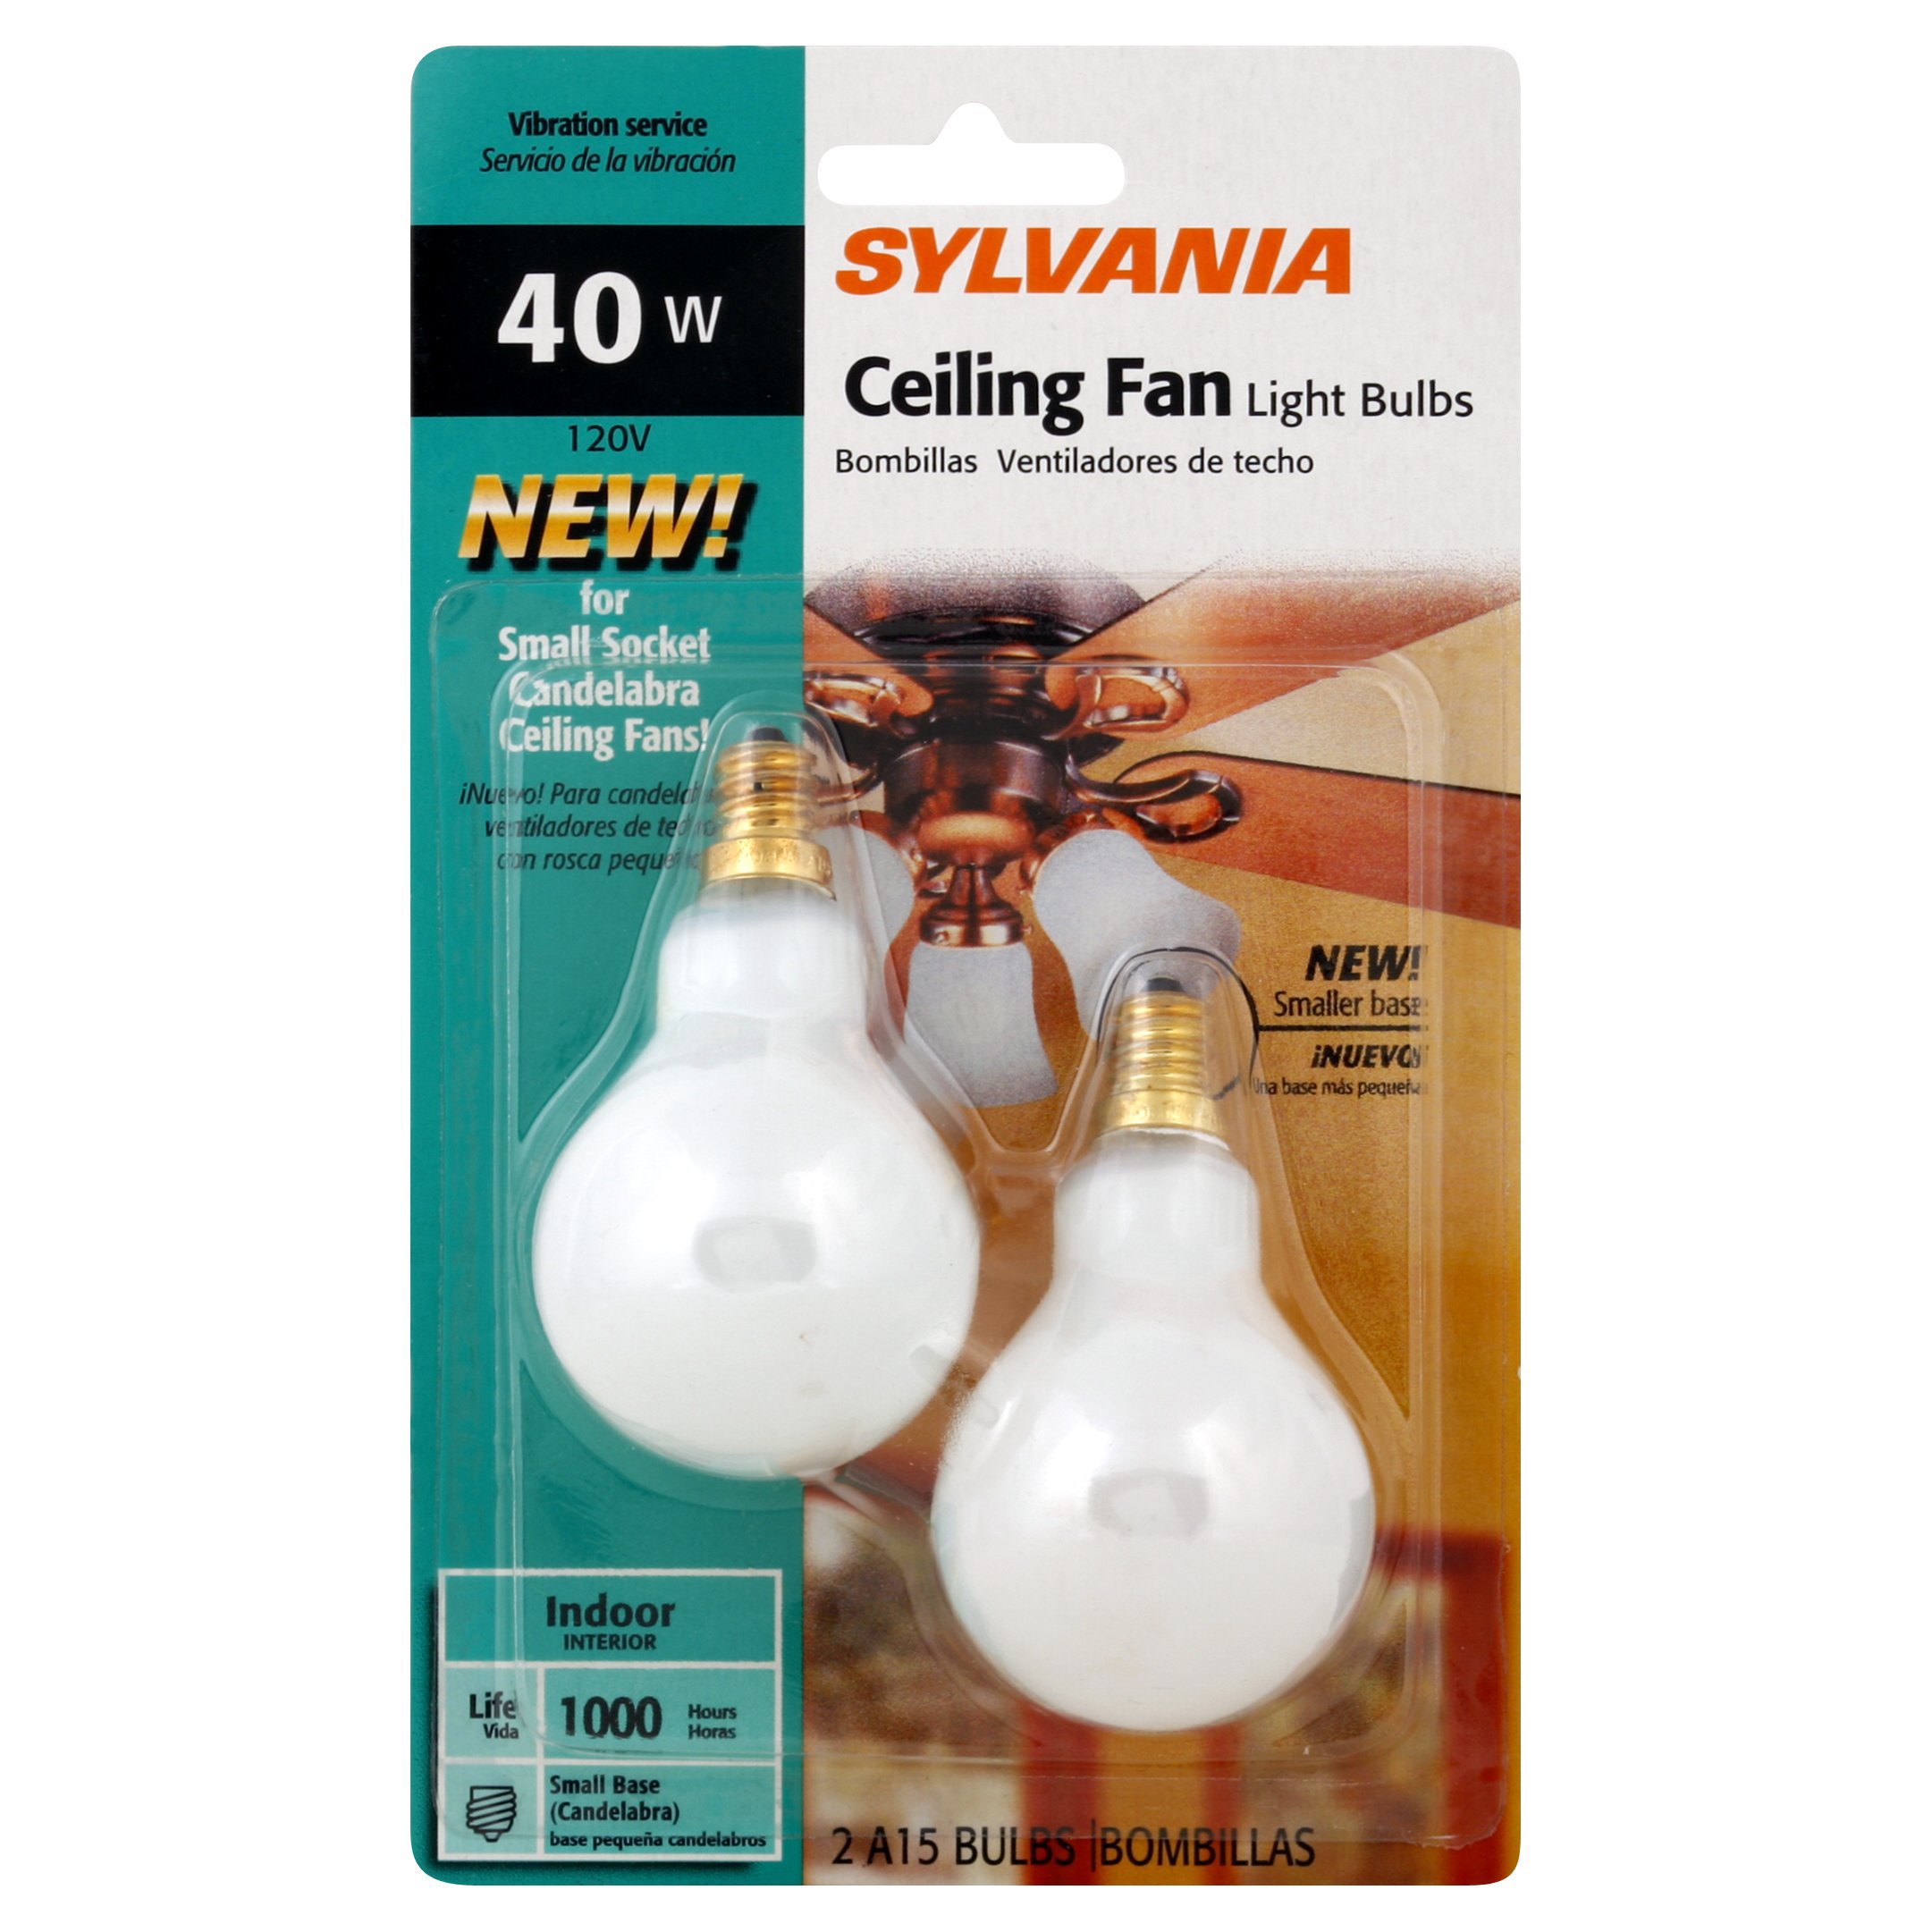 Ceiling Fan Led Bulbs Off 66, Small Ceiling Fan Led Light Bulbs